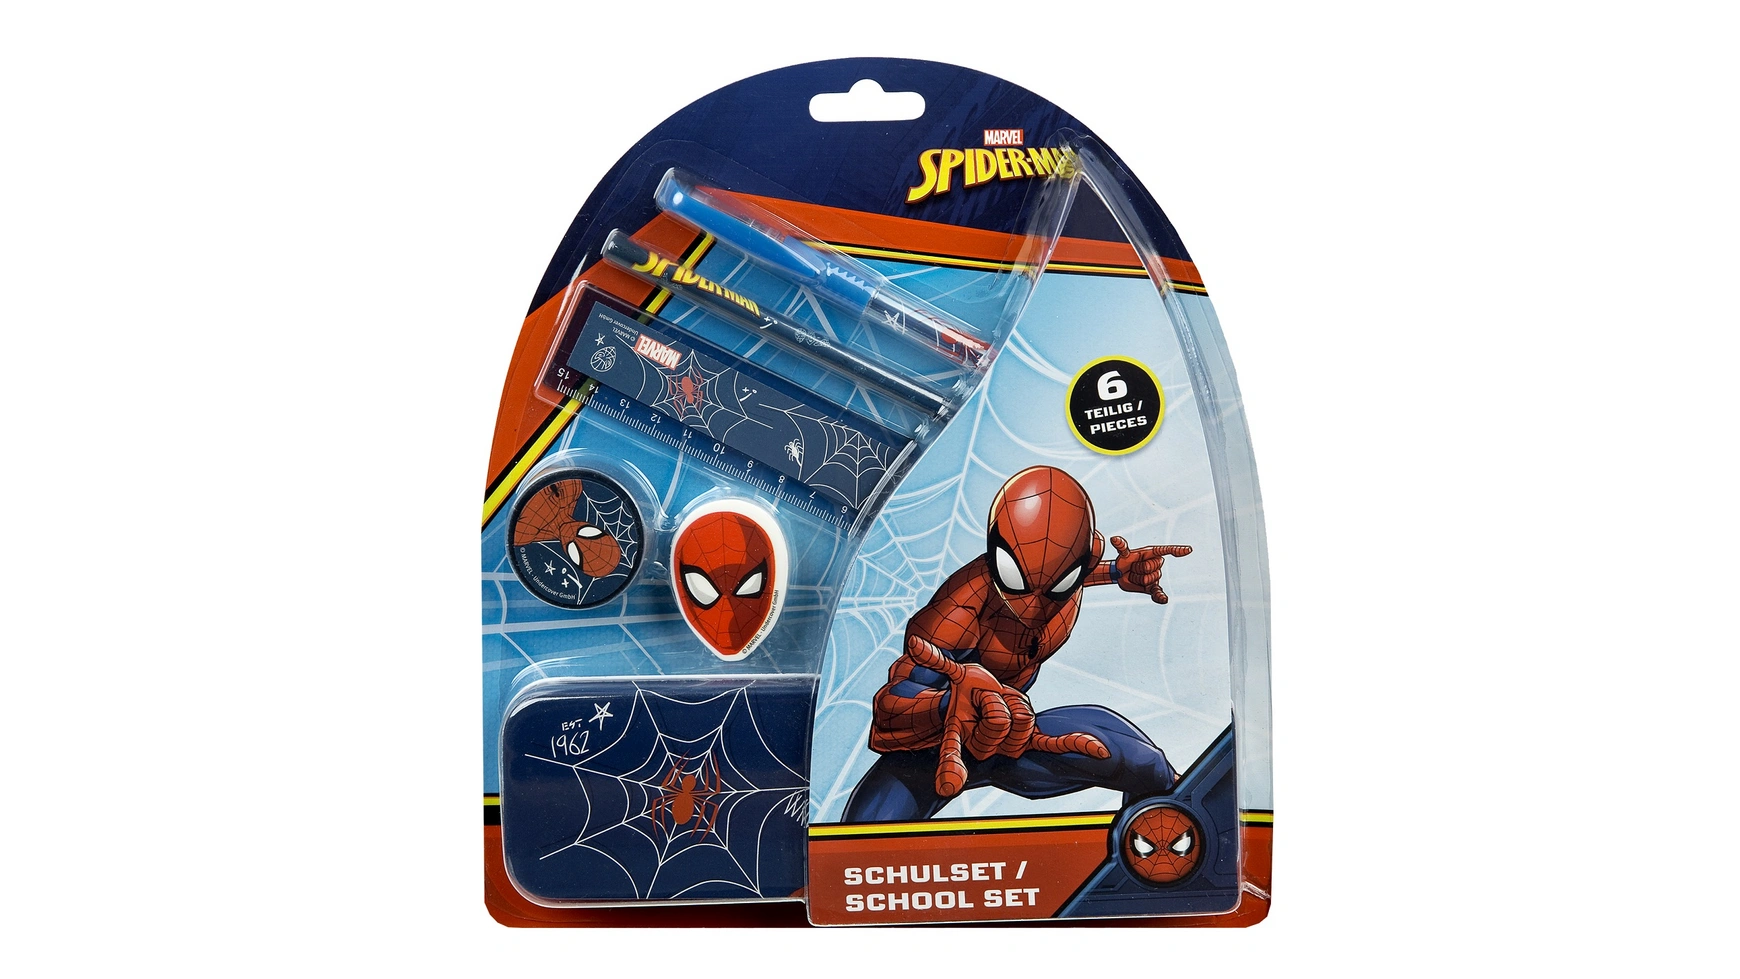 Undercover - школьный набор marvel spider-man, 6 предметов No Brand набор hollywood rides marvel spider man